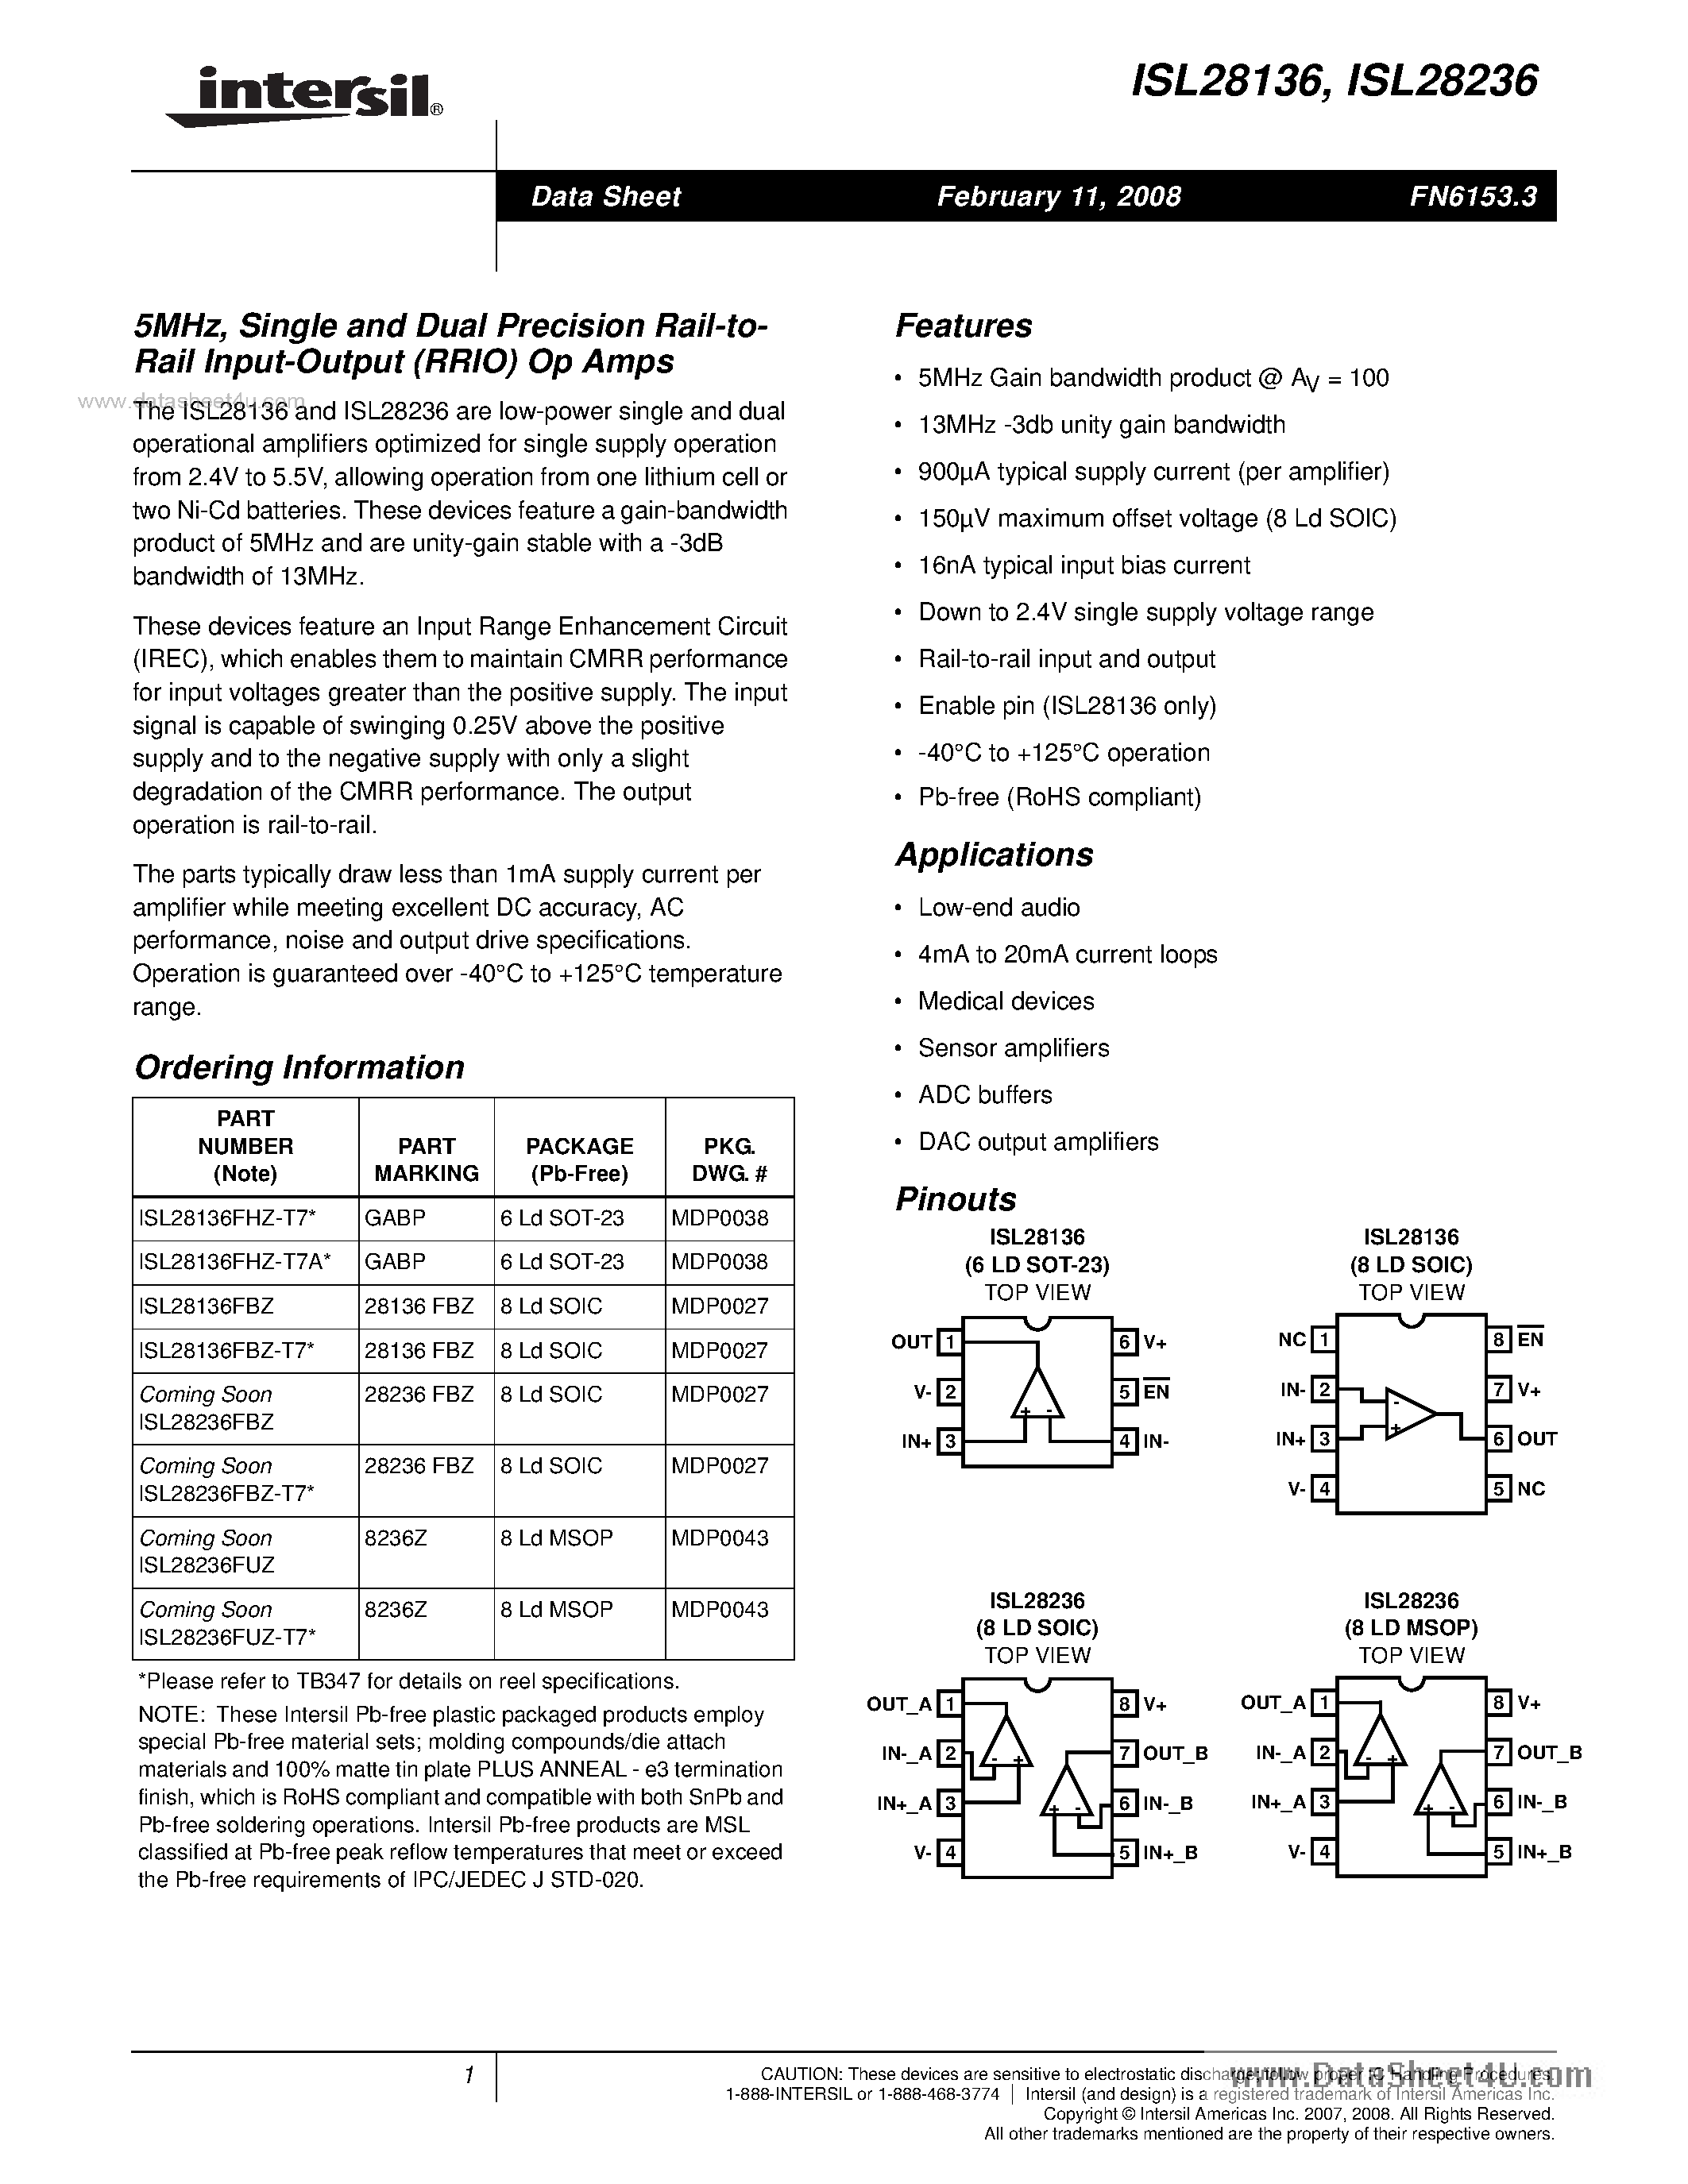 Datasheet ISL28236 - (ISL28136 / ISL28236) Single and Dual Precision Rail-to-Rail Input-Output (RRIO) Op Amps page 1